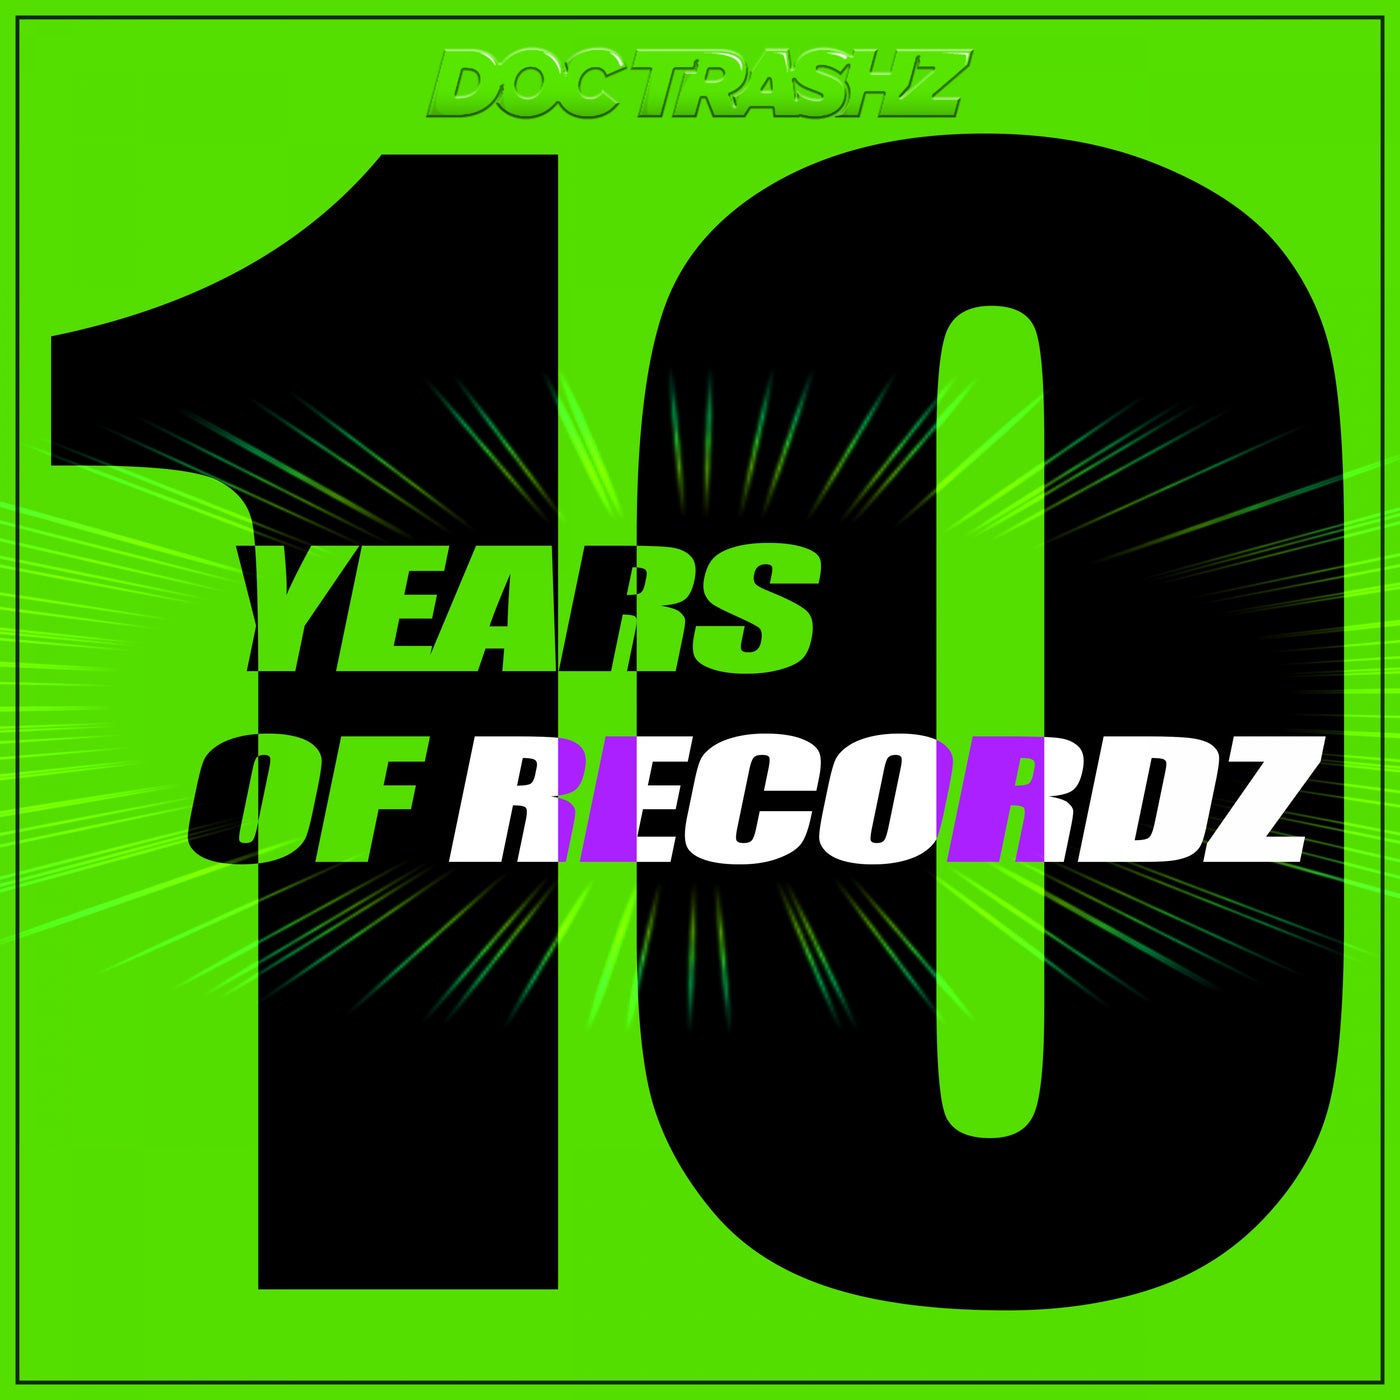 10 Years of RECORDZ